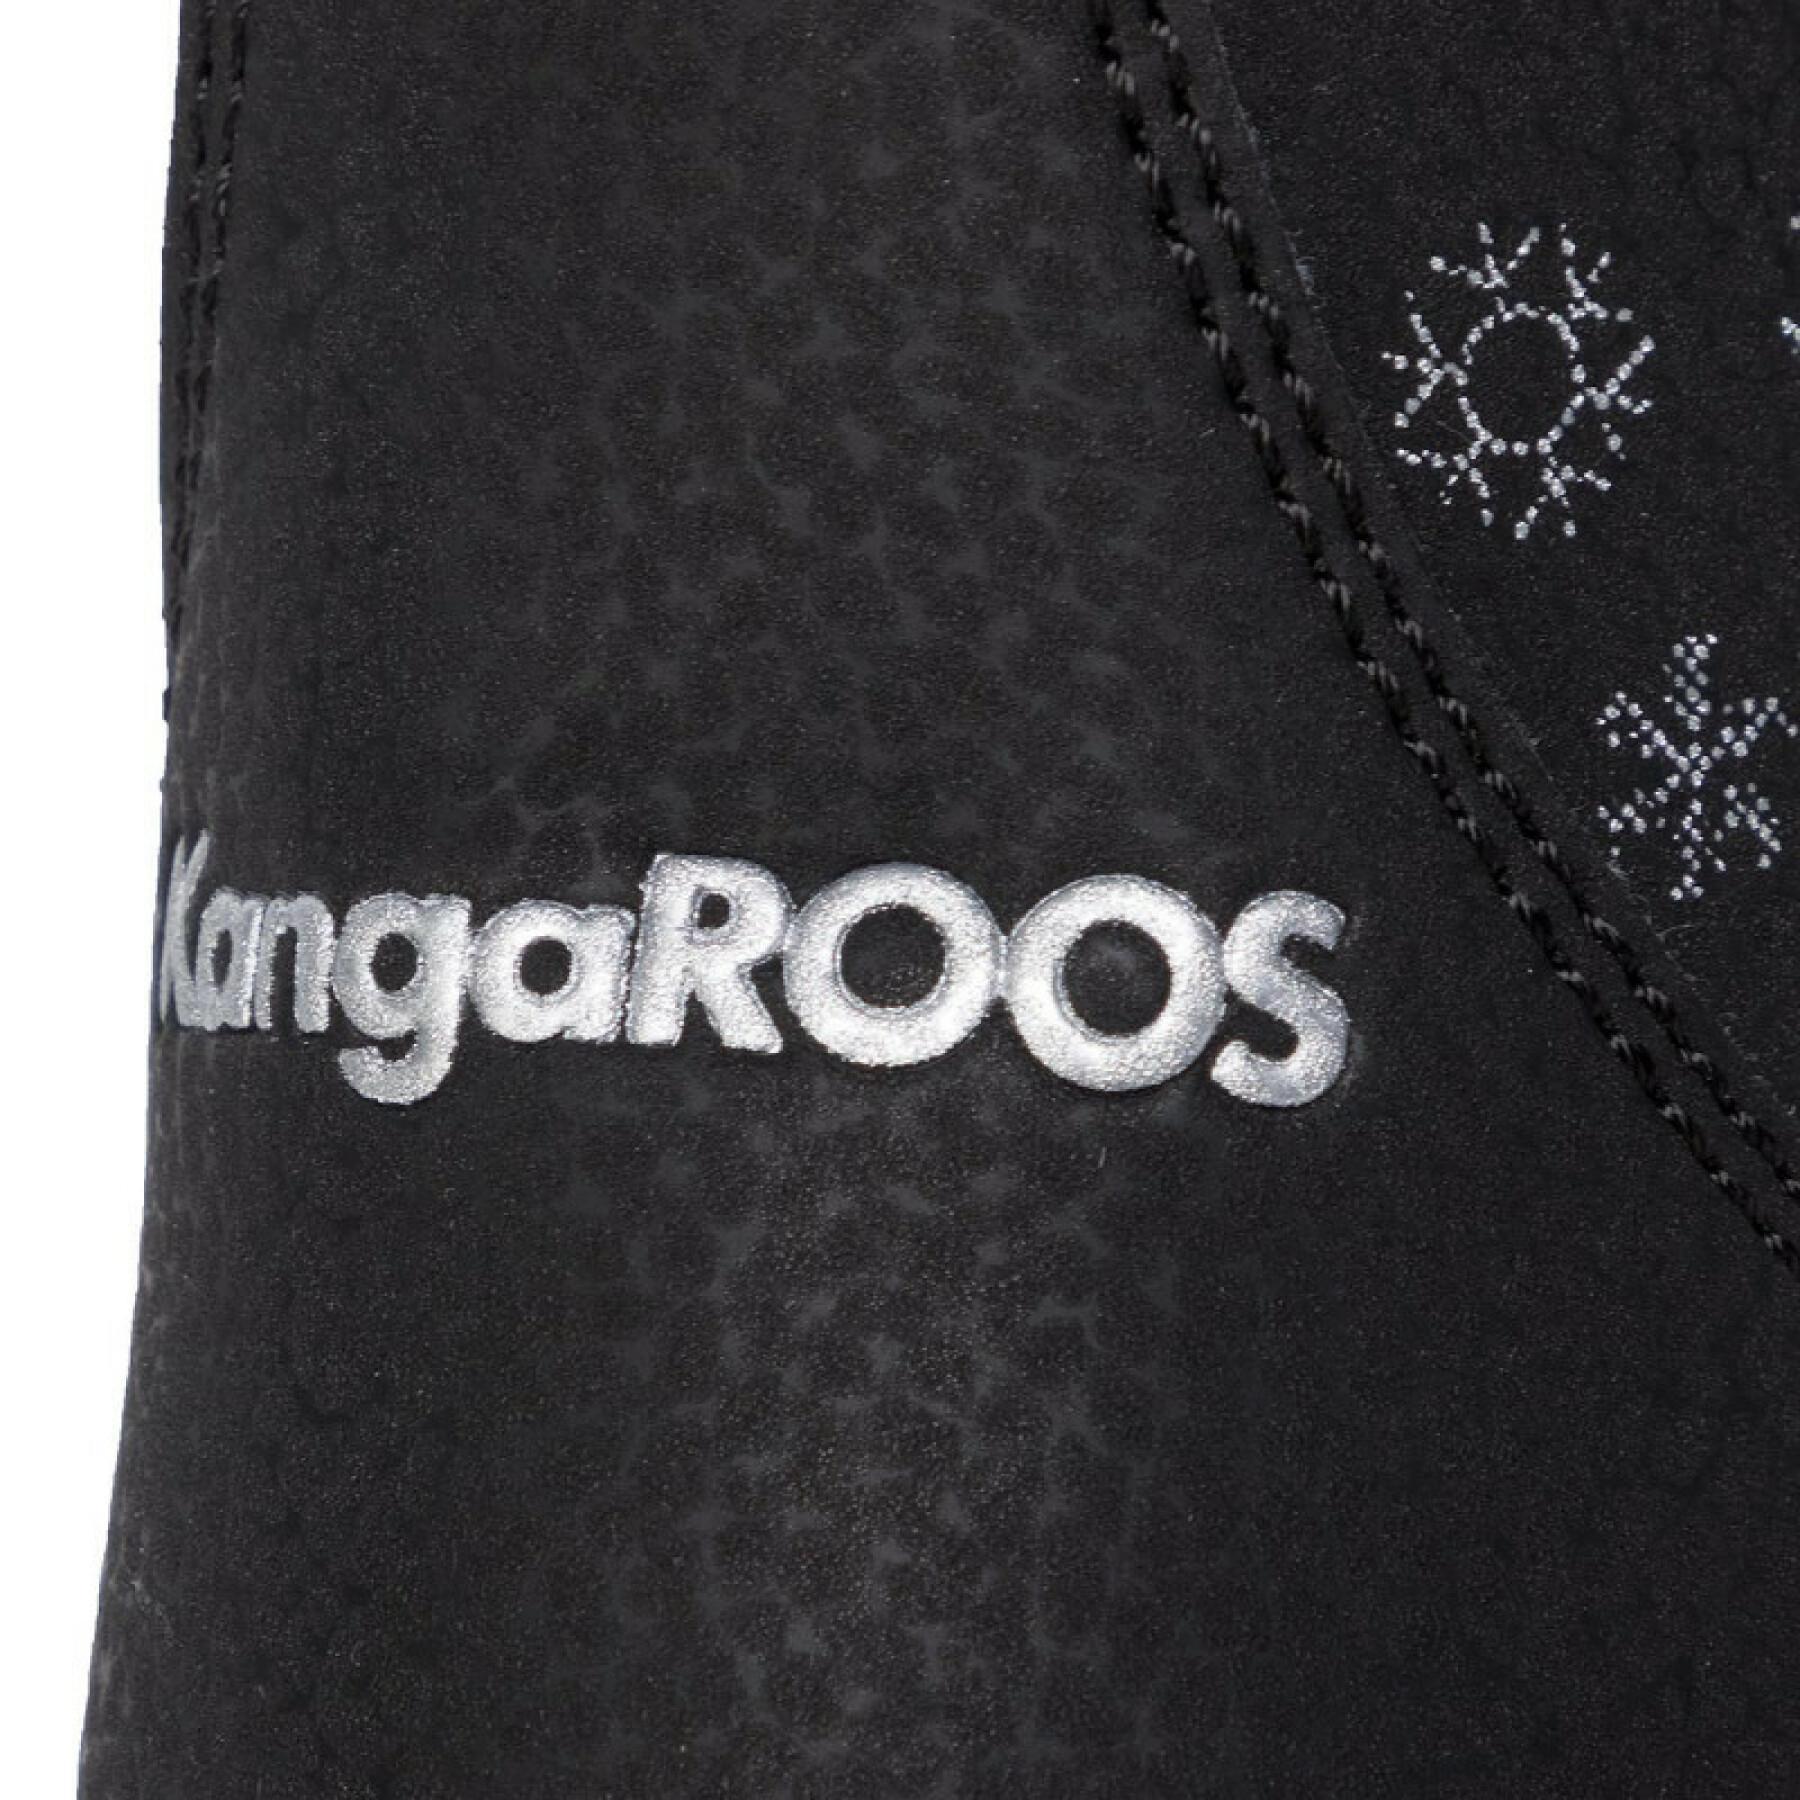 Children's boots KangaROOS K-Glaze RTX